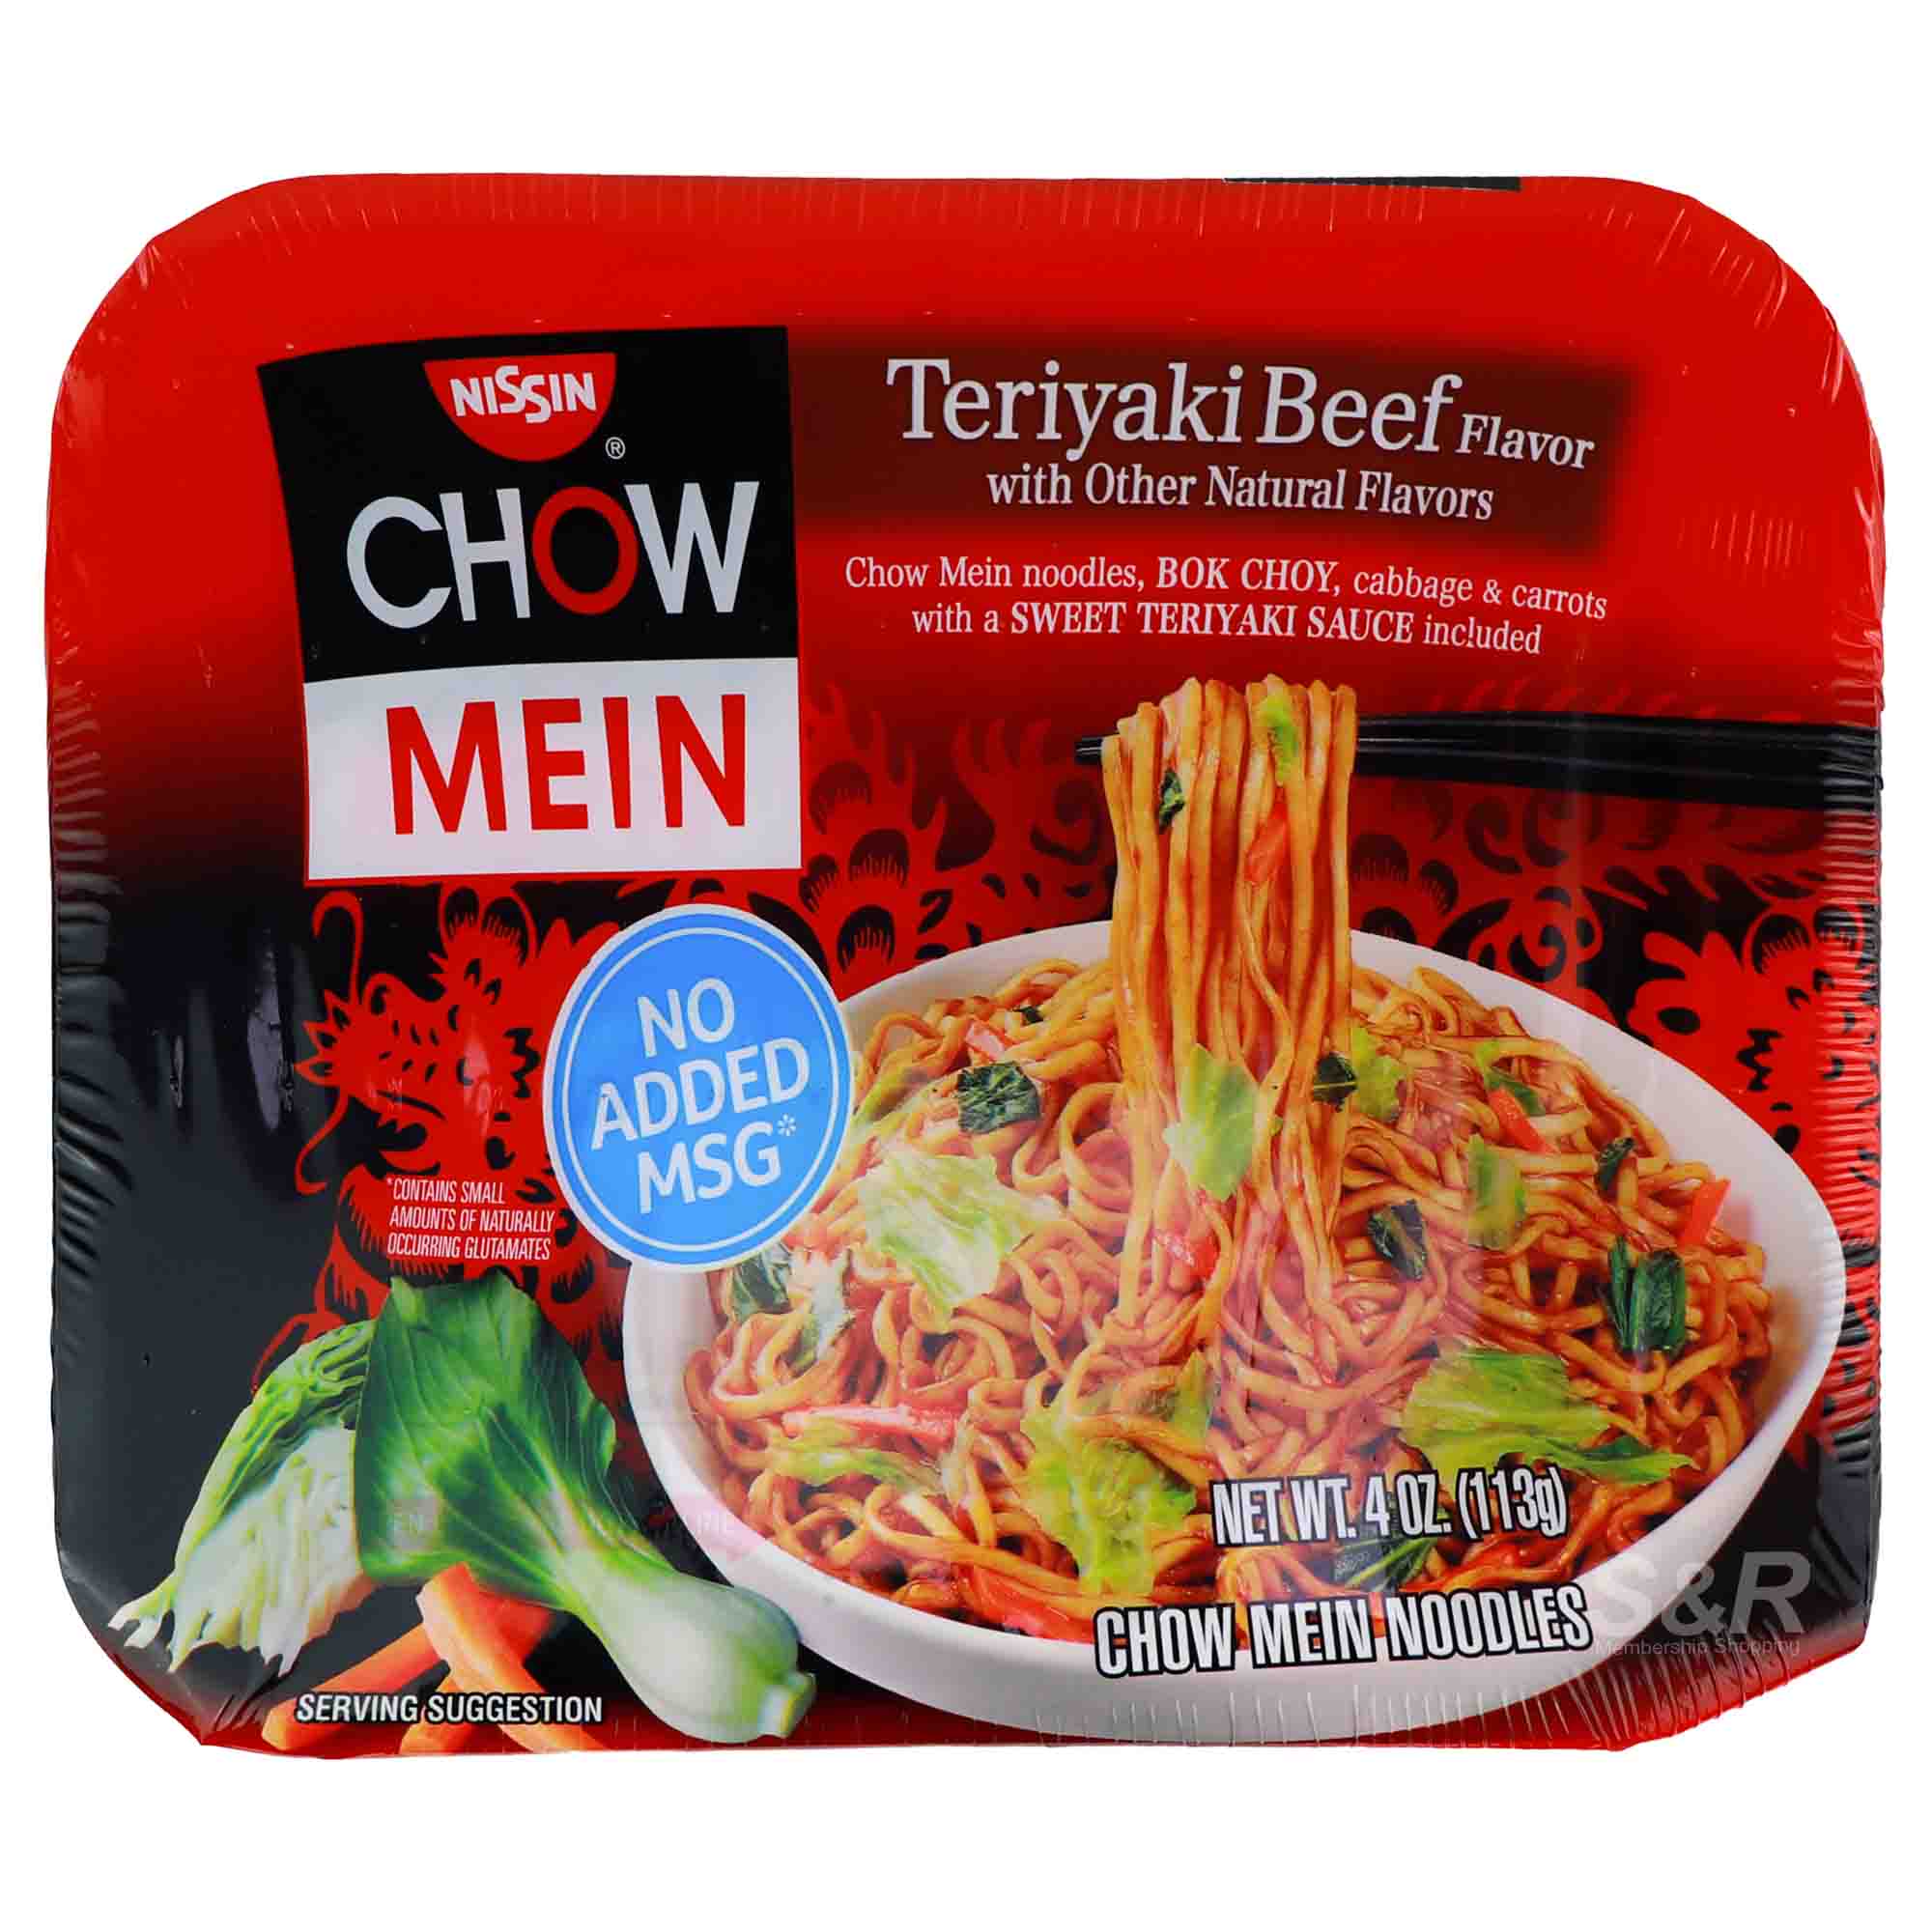 Nissin Chow Mein Teriyaki Beef Flavor Noodles 113g